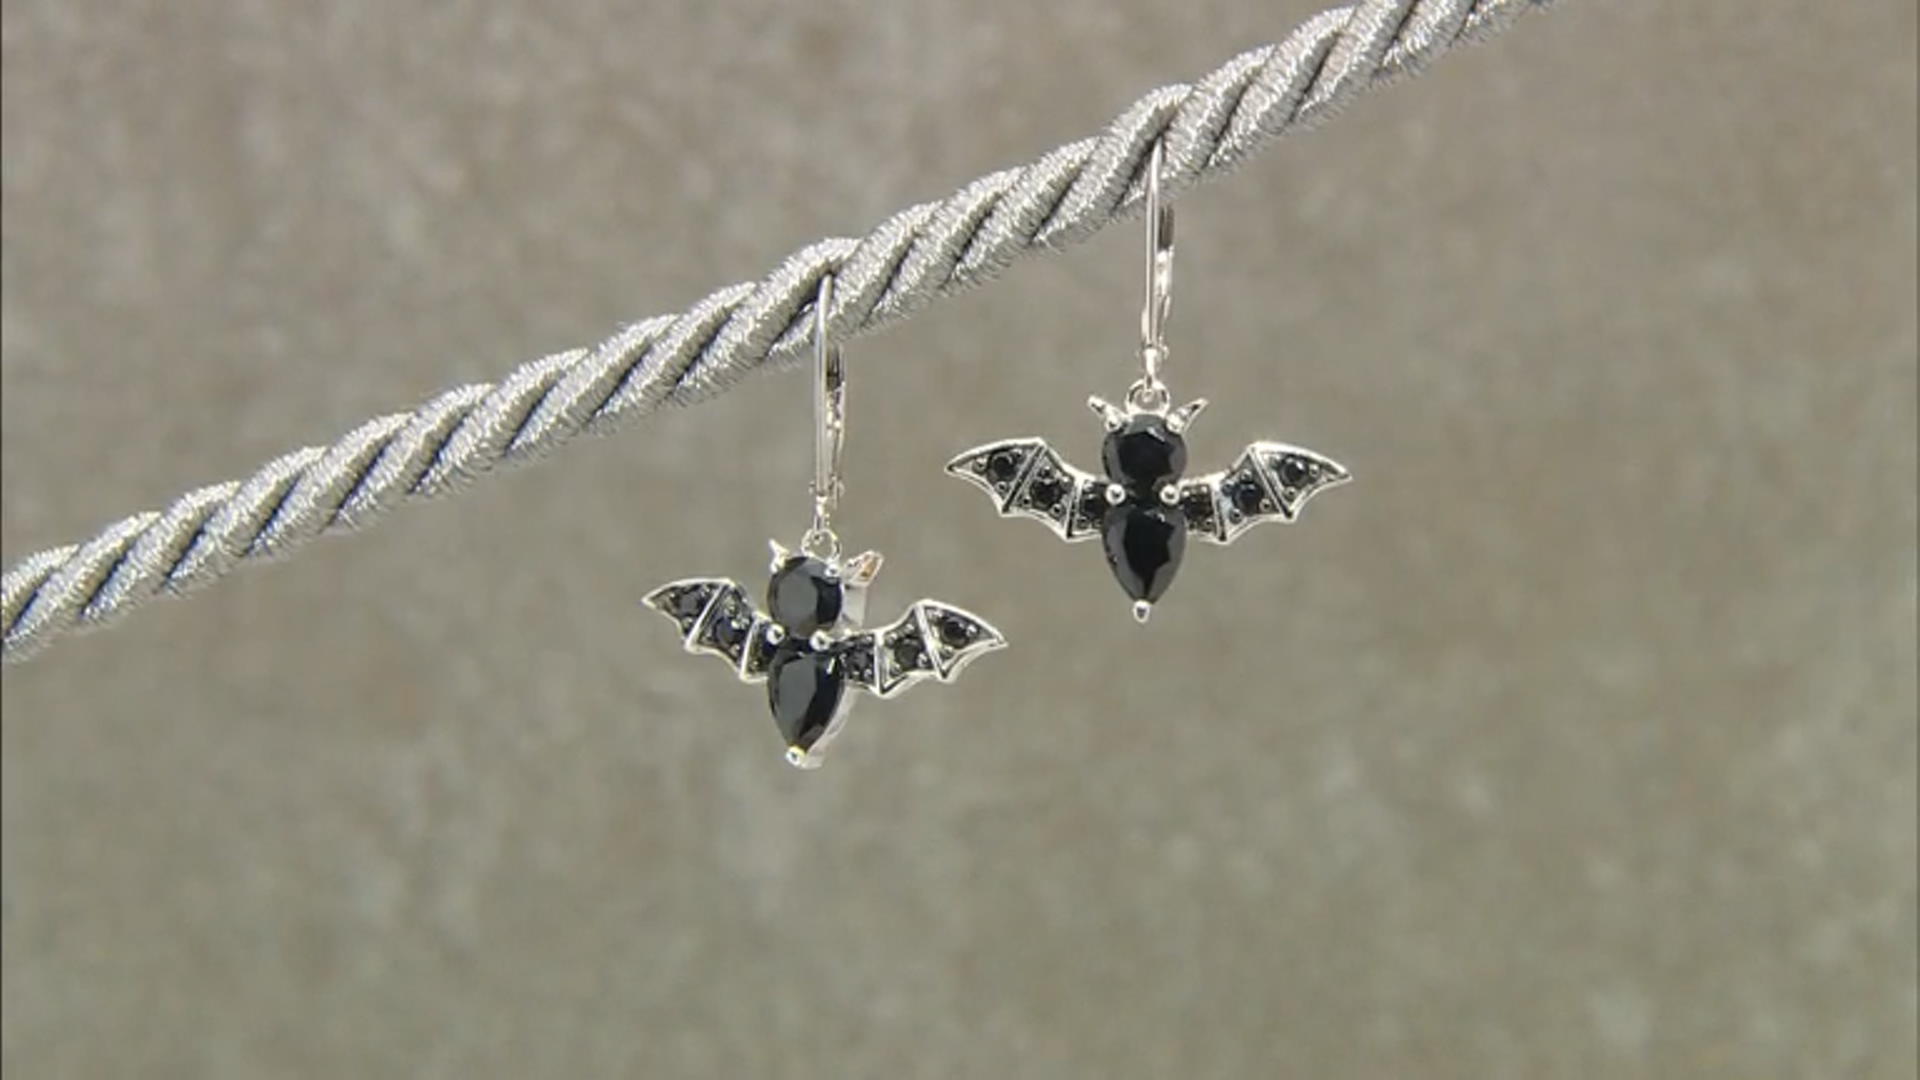 Black Rhodium Over Sterling Silver Bat Dangle Earrings 2.95ctw Video Thumbnail